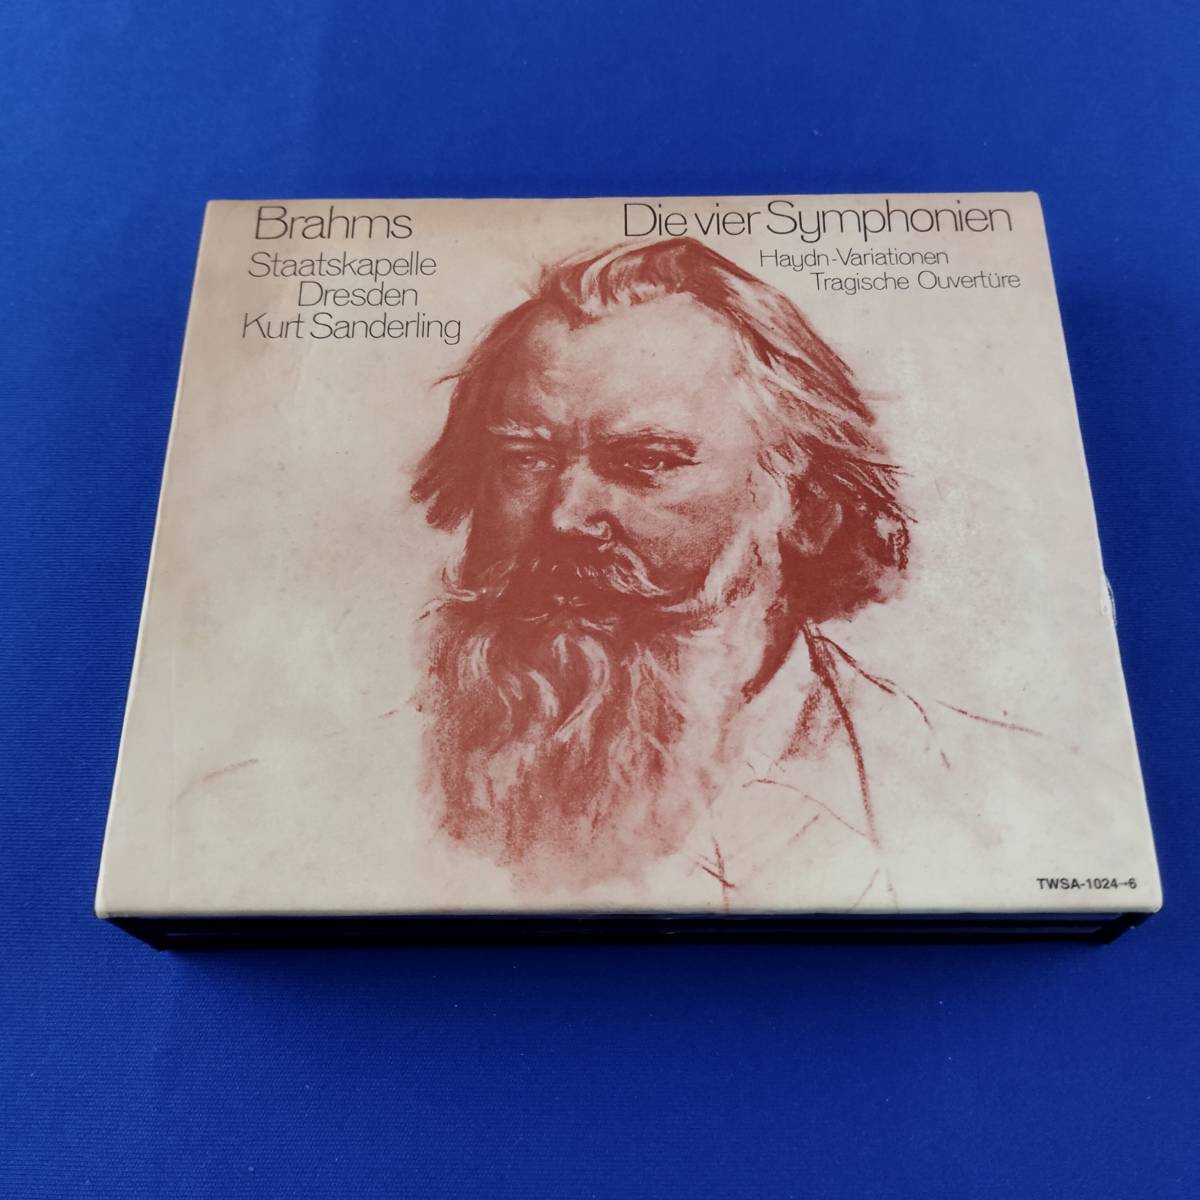 2SC13 CD クルト・ザンデルリンク ドレスデン・シュターツカペレ ブラームス 交響曲全集 SACD